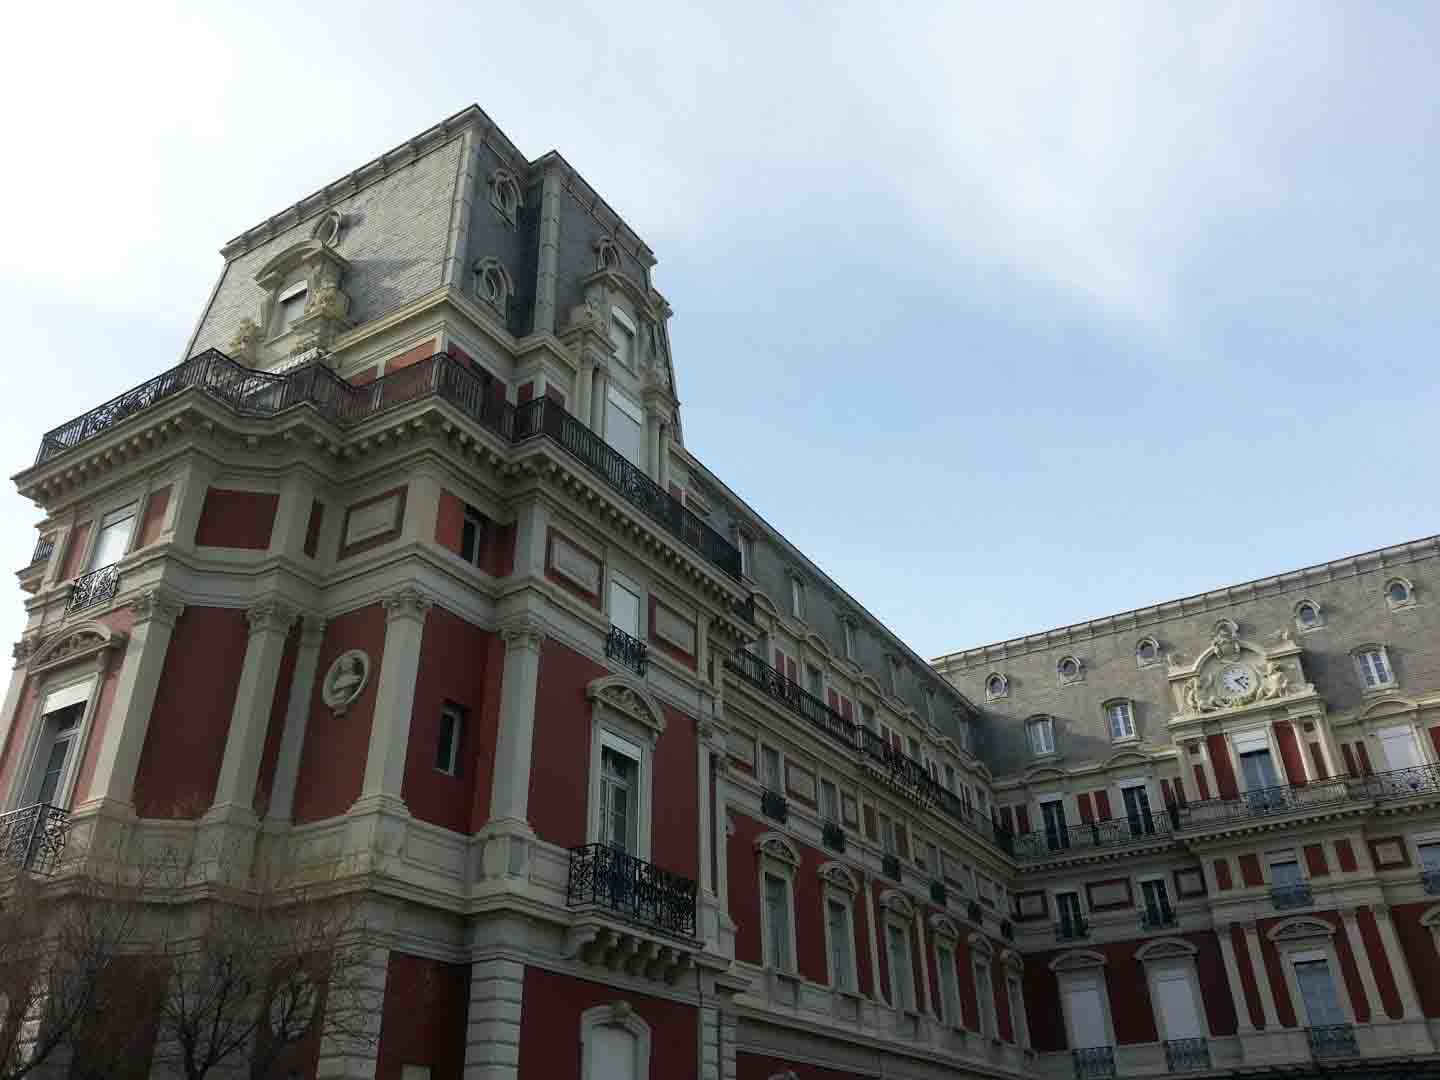 Hotel du Palais Biarritz